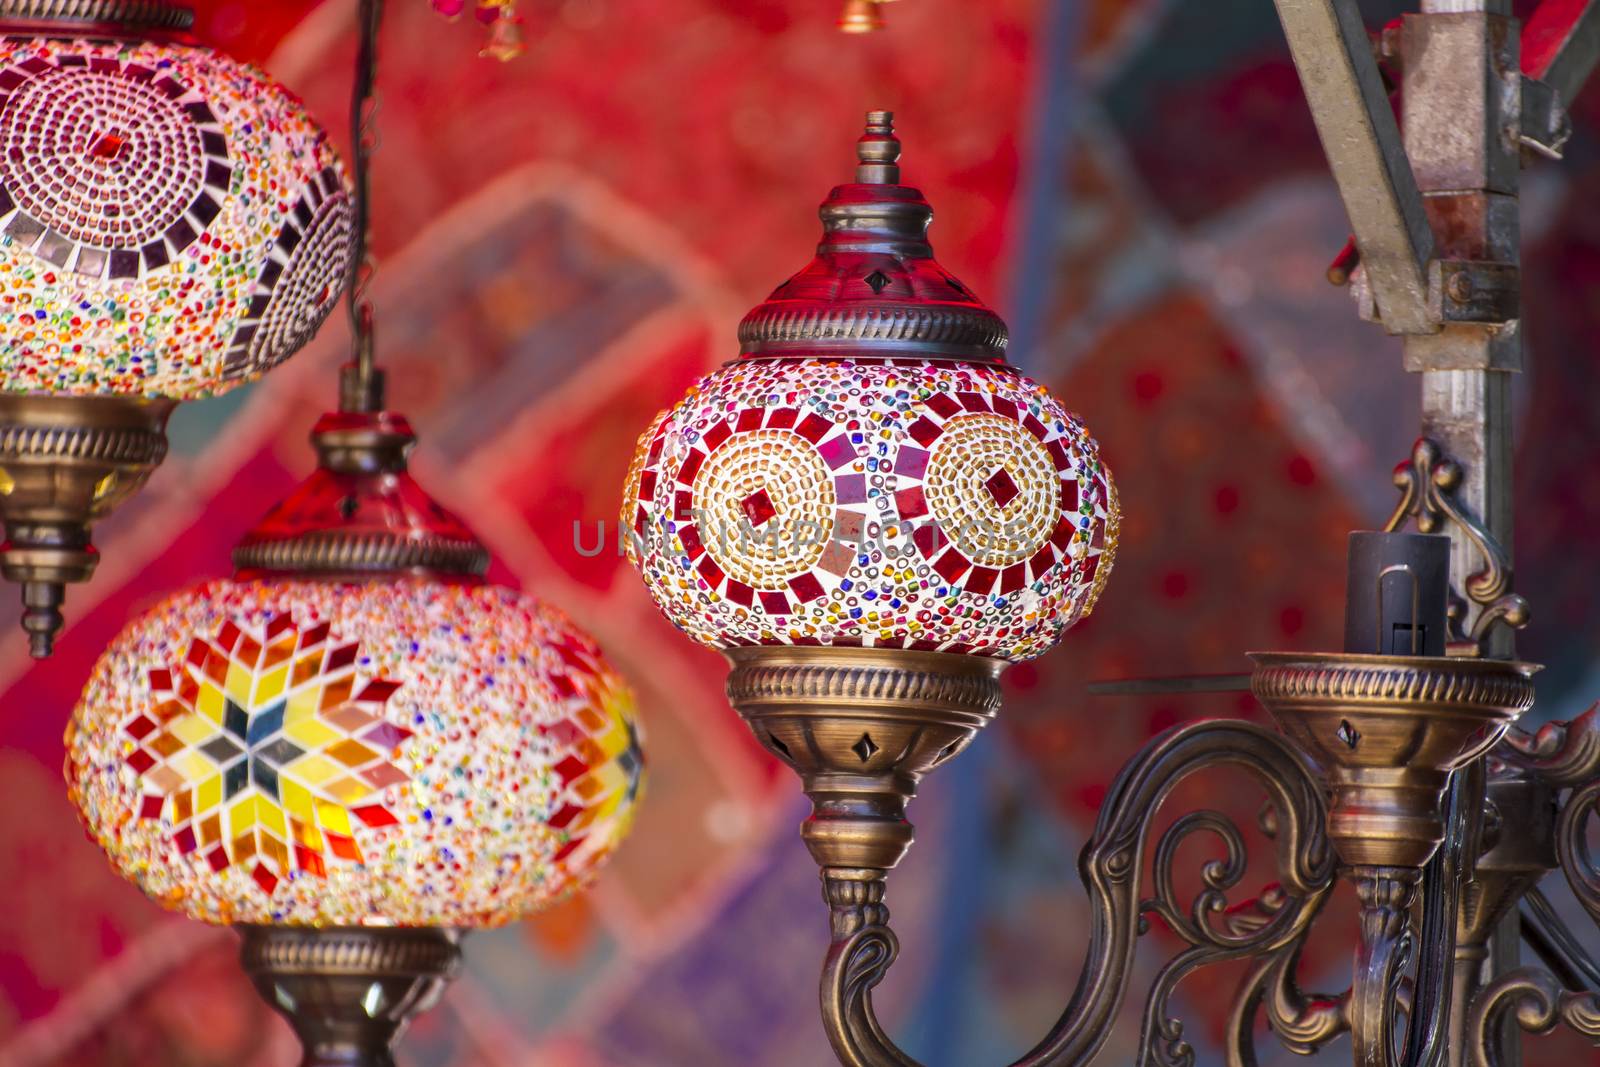 Souvenir, Oriental style lamps craft in a bazaar